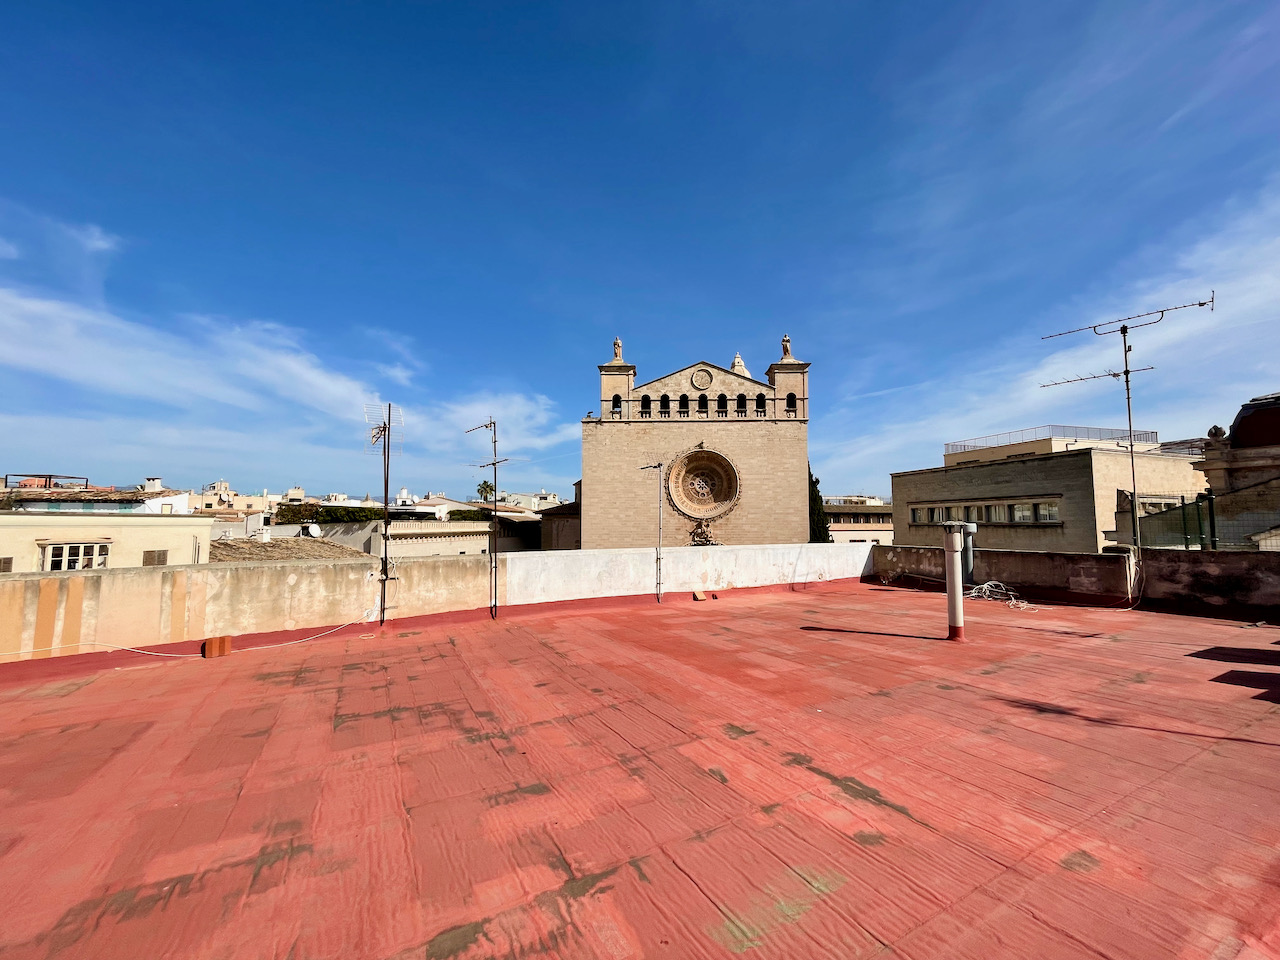 Fantastisch penthouse op Plaza San Francisco in de oude stad van Palma.